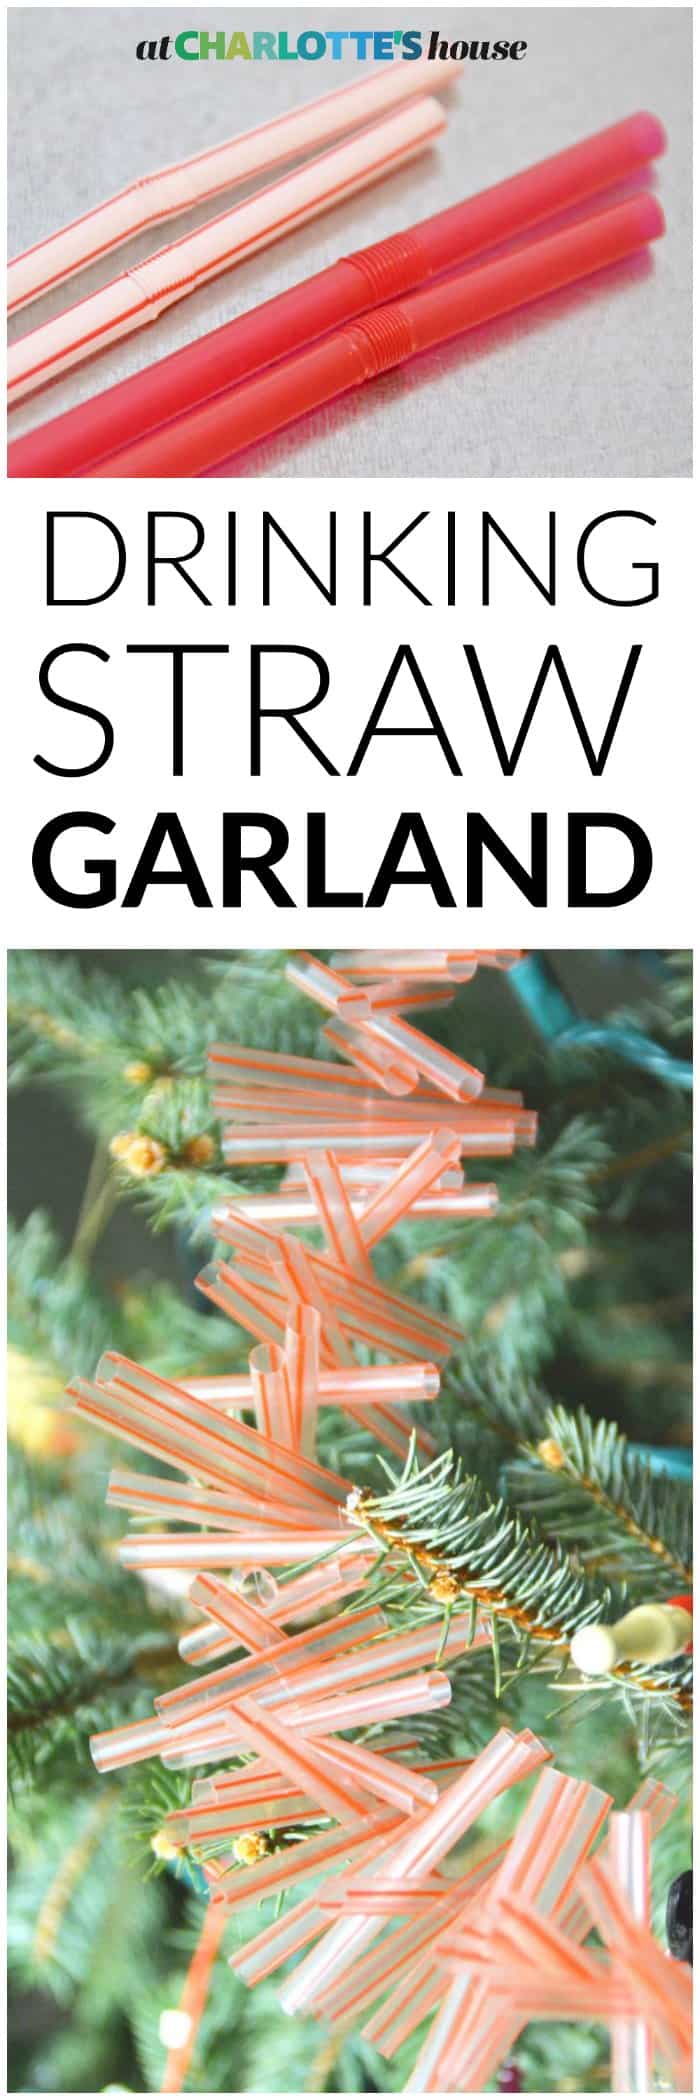 Easy Christmas garland using plastic drinking straws.